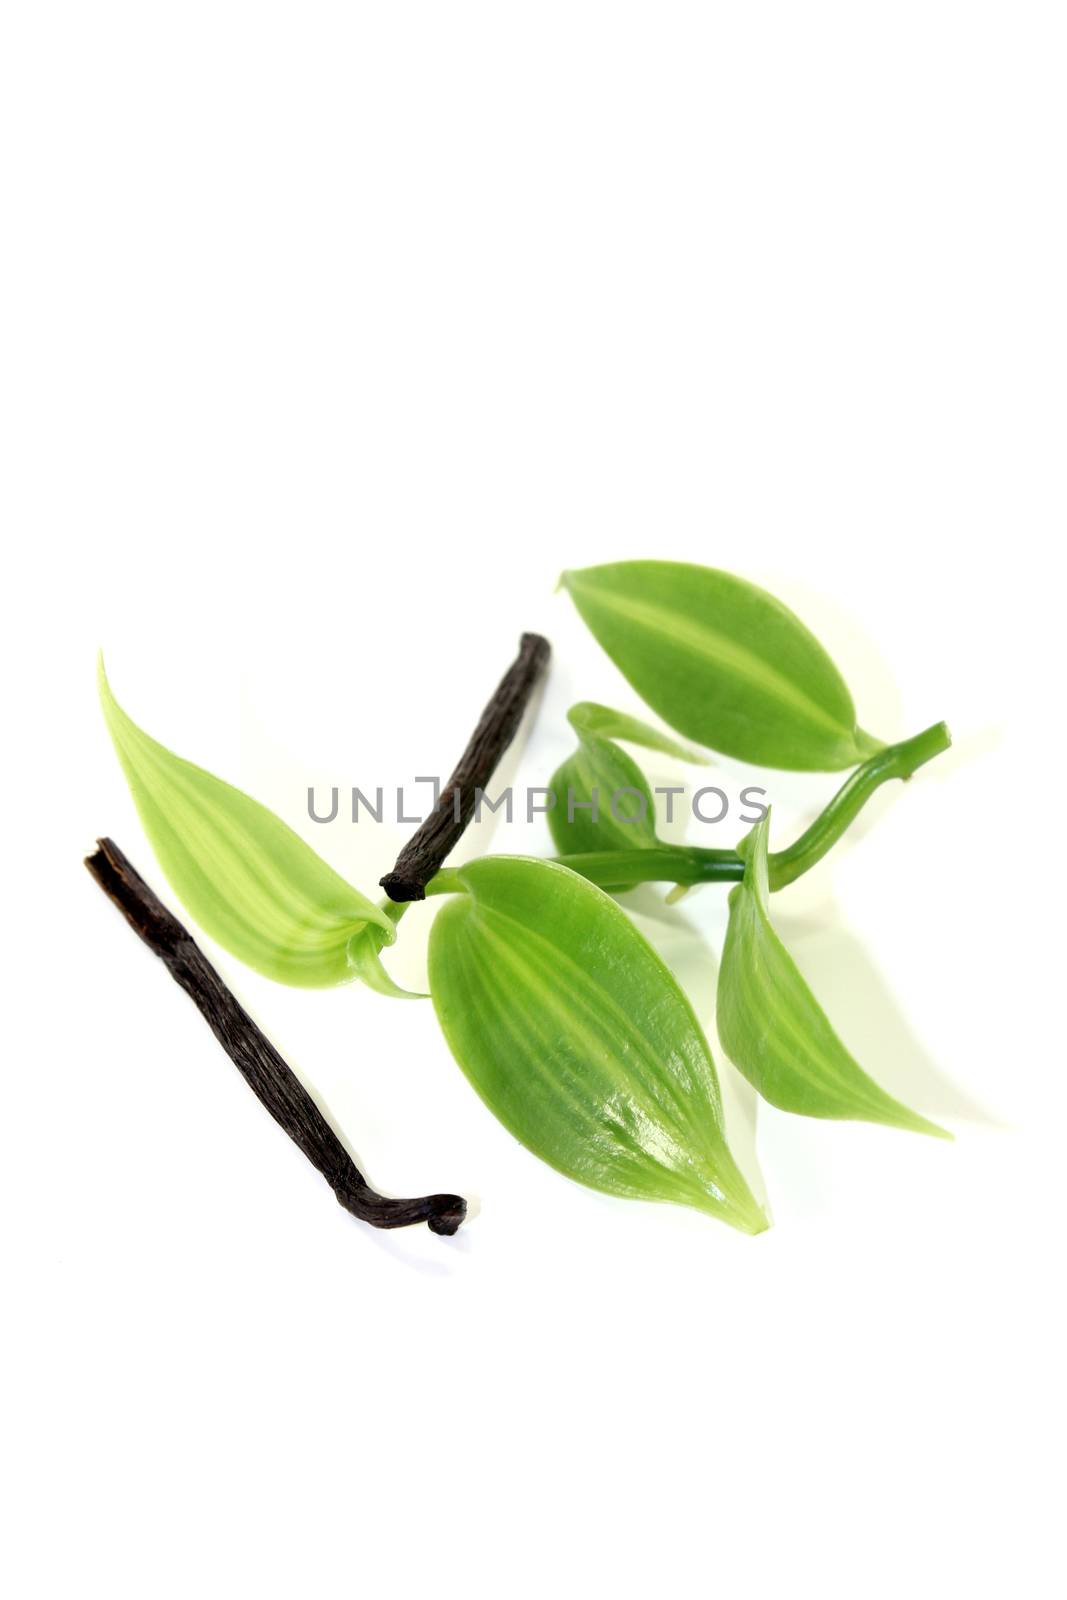 dark Vanilla sticks with green vanilla leaves on a light background